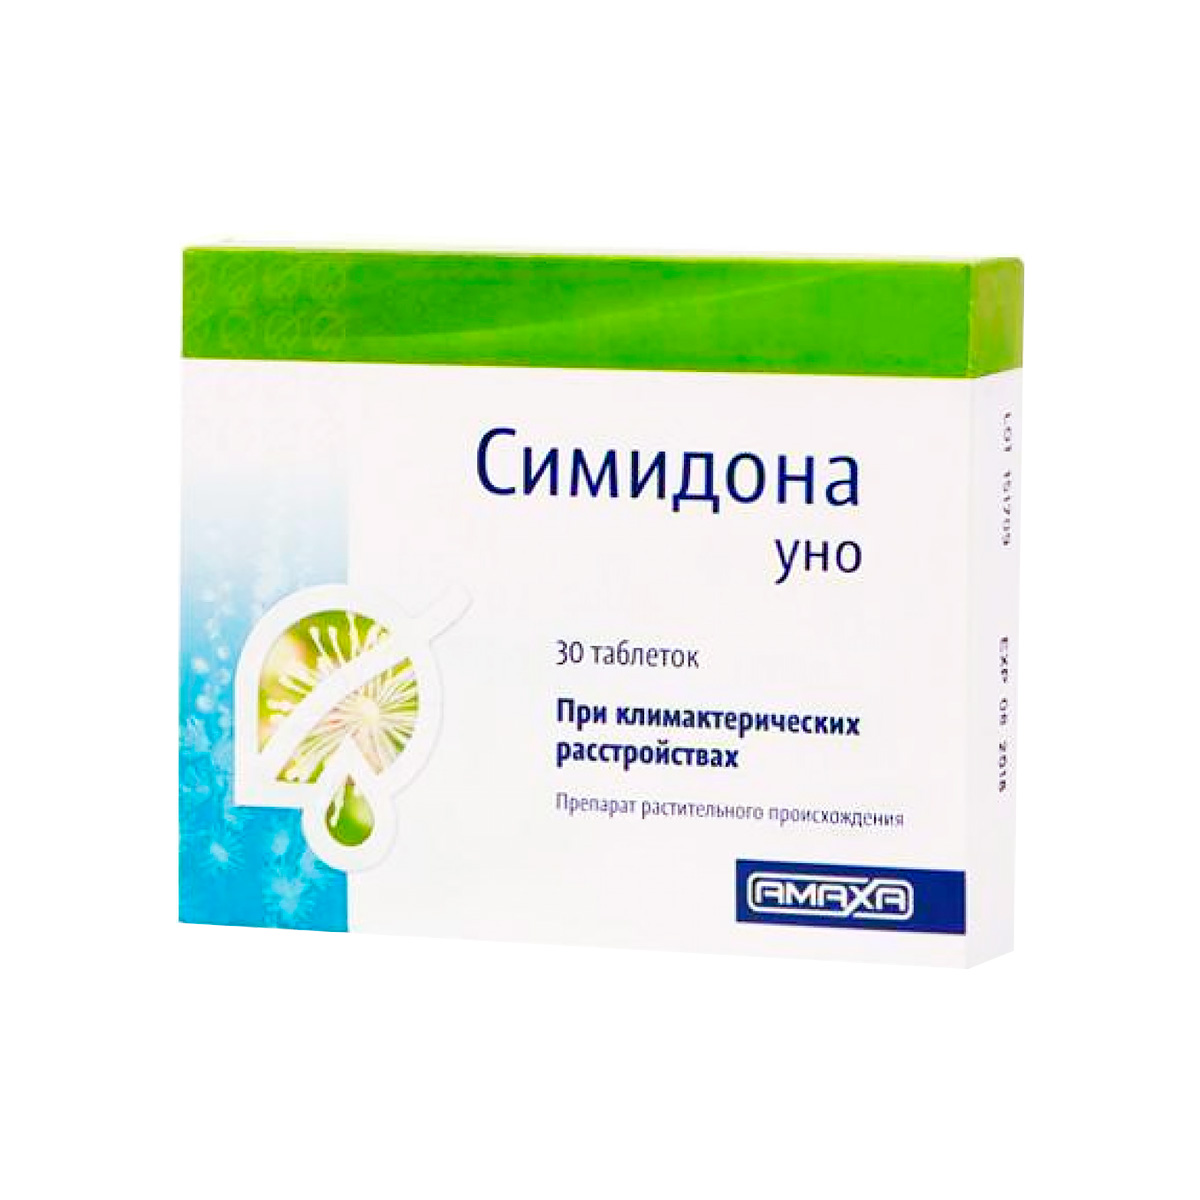 Симидона Уно 6,5 мг таблетки 30 шт